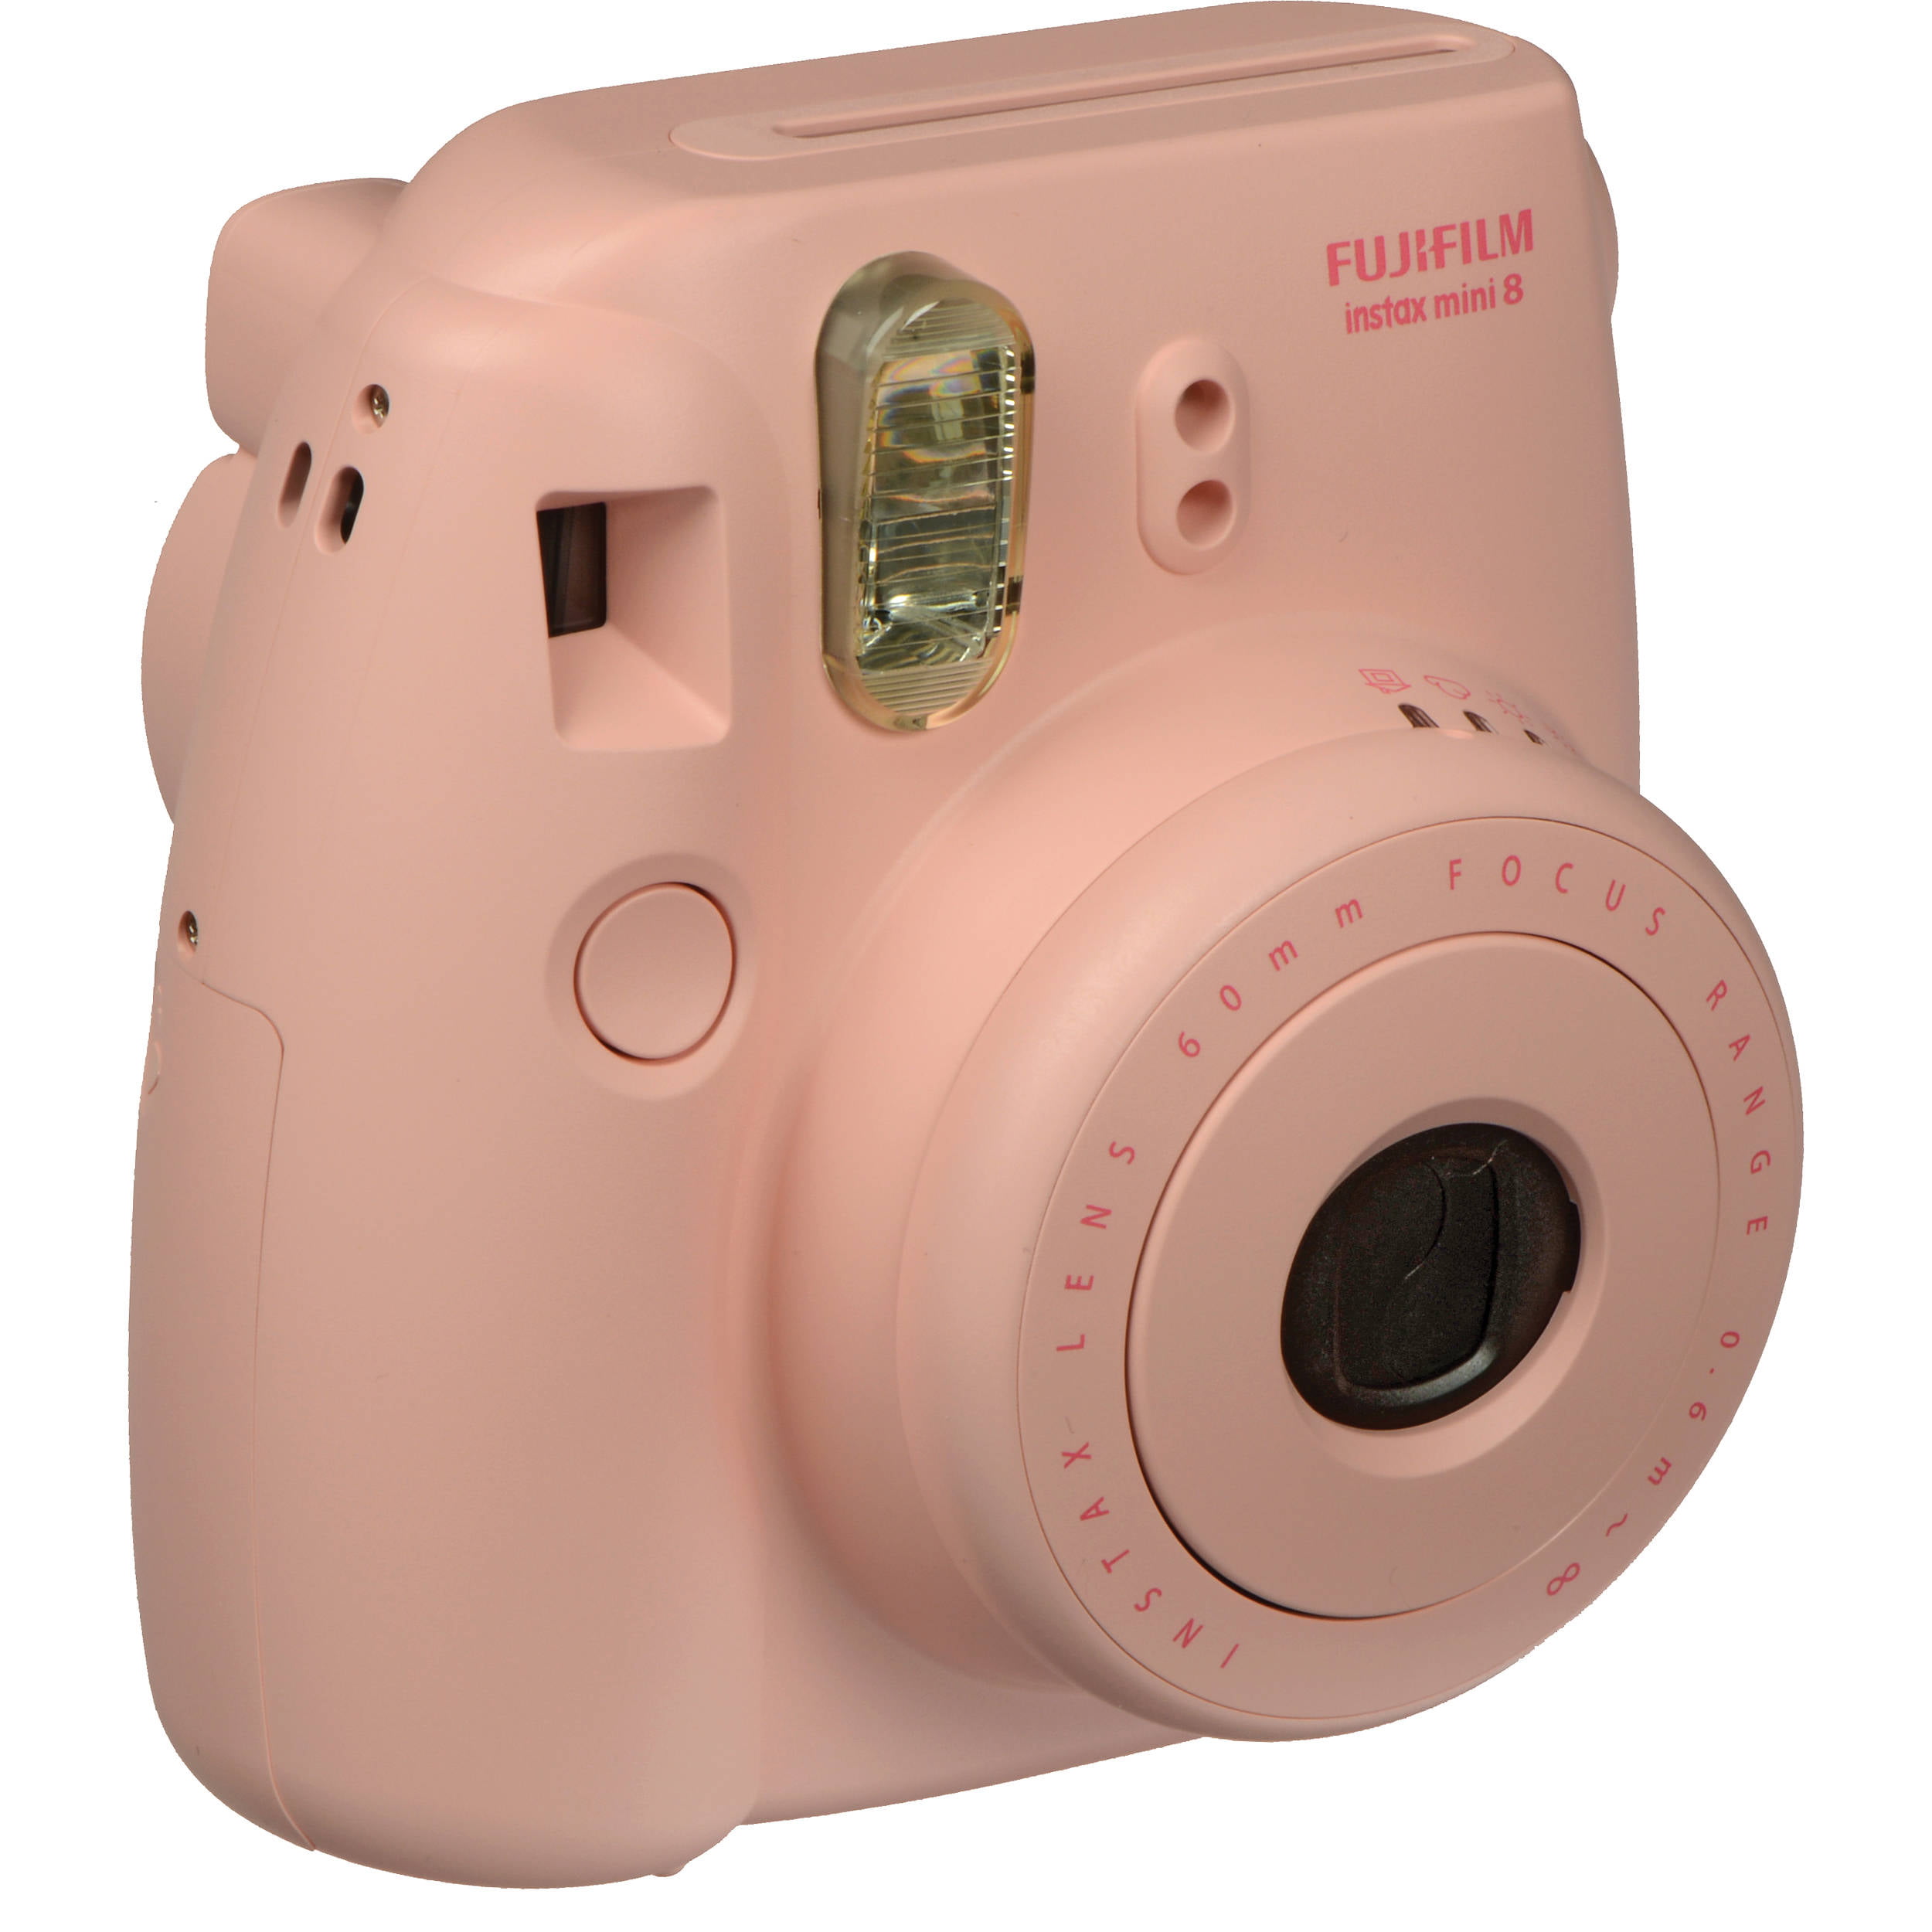 Barry Zuidelijk studio Fujifilm Instax Mini 8 Instant Film Camera - Pink 16273415 - Walmart.com